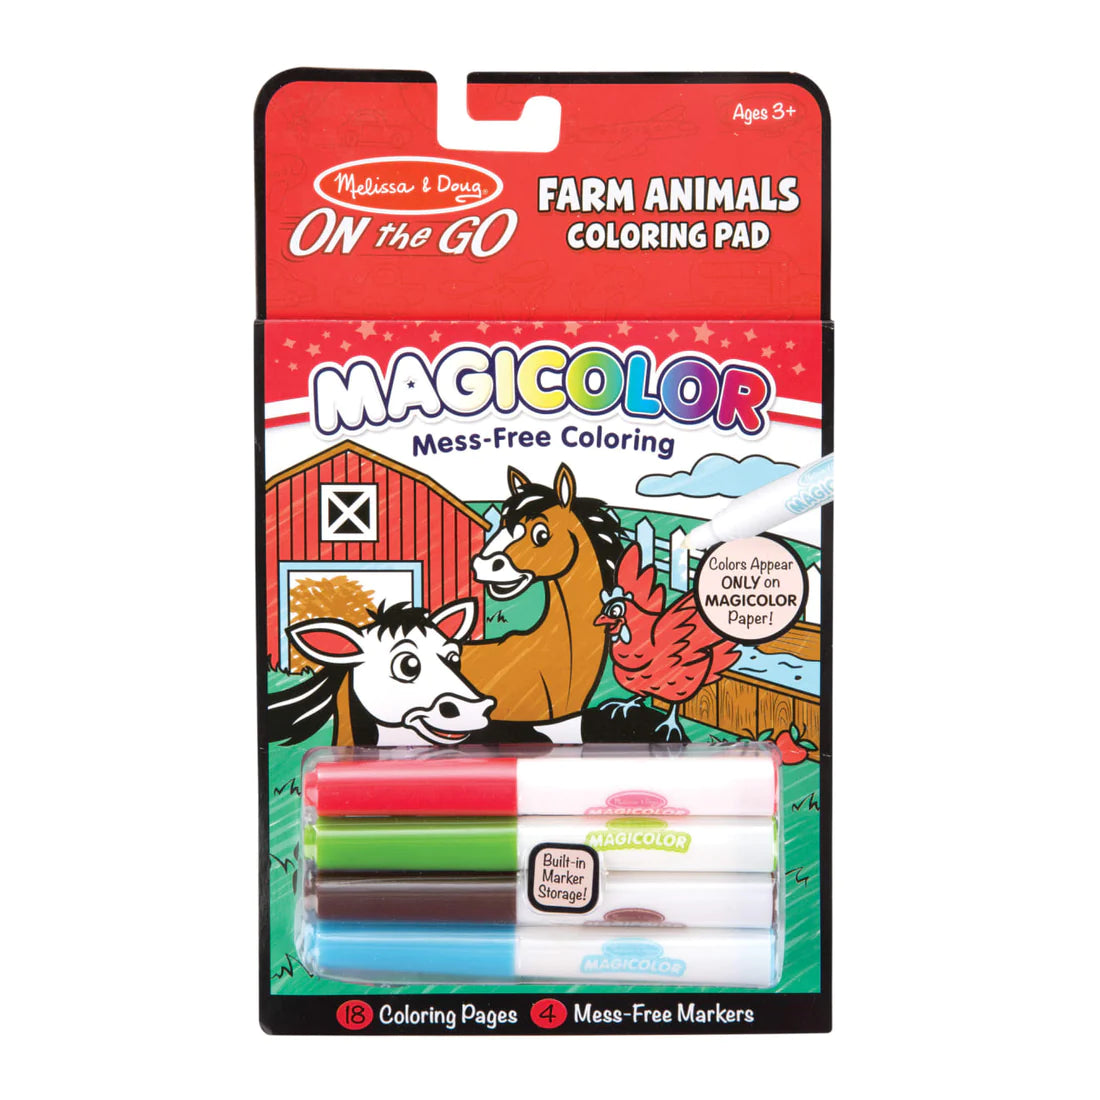 Melissa & Doug Magicolor - On the Go - Farm Animals Coloring Pad